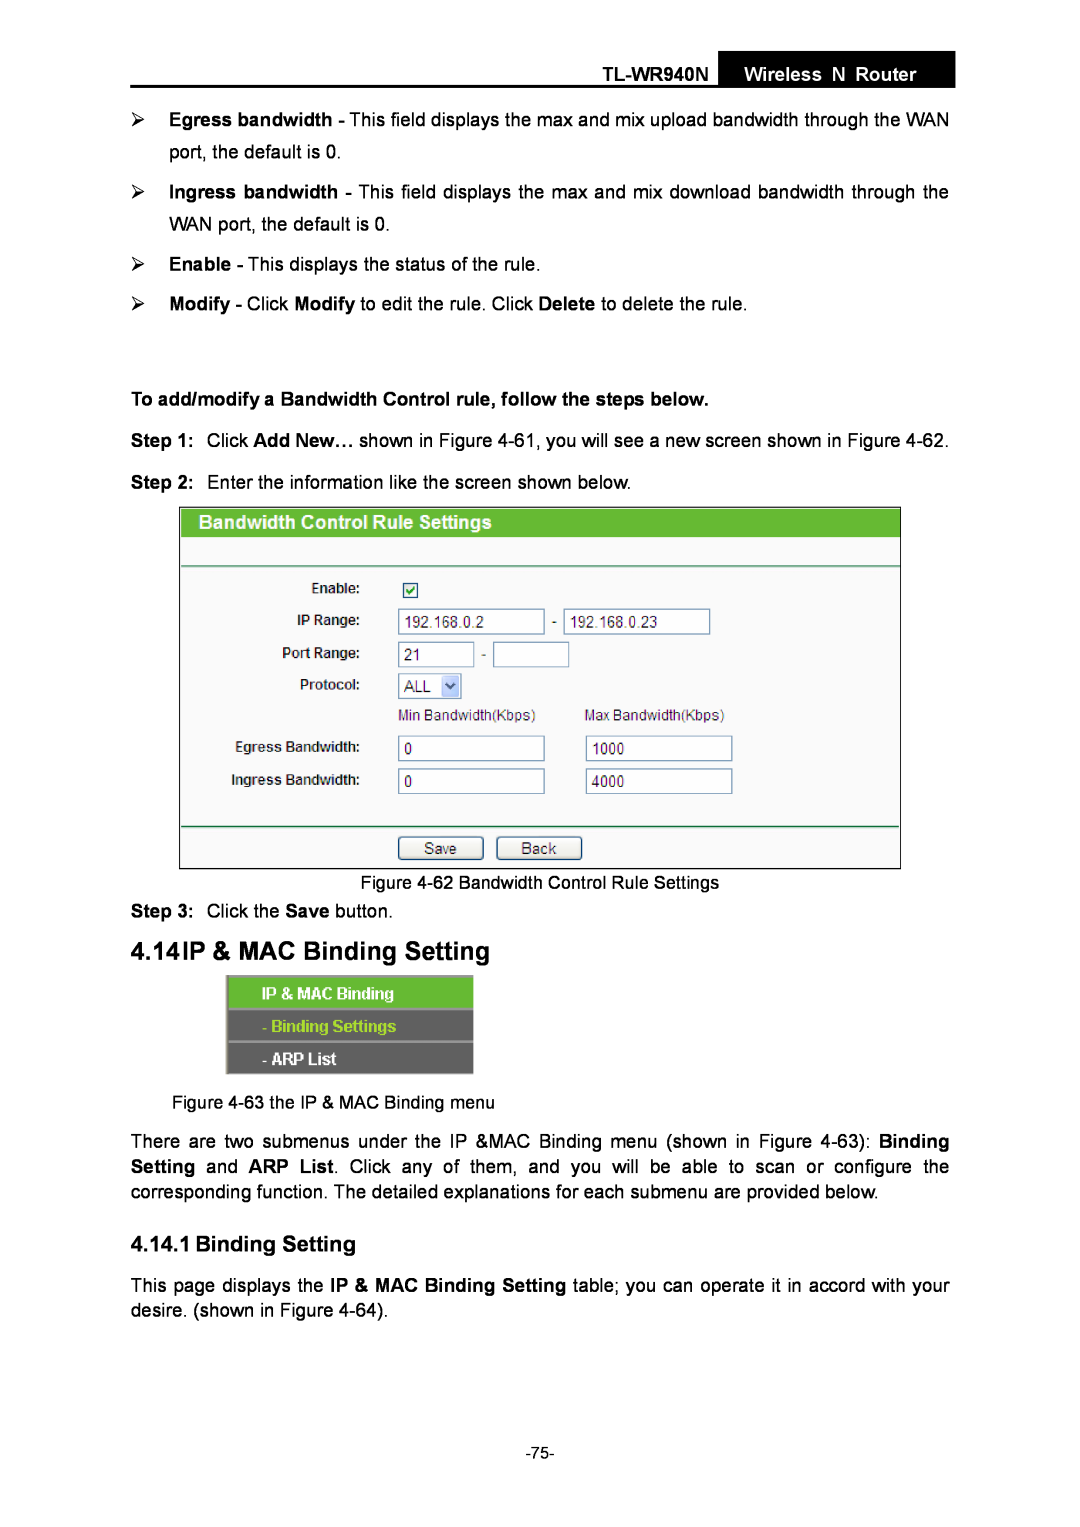 TP-Link TL-WR940N manual 4.14IP & MAC Binding Setting, To add/modify a Bandwidth Control rule, follow the steps below 